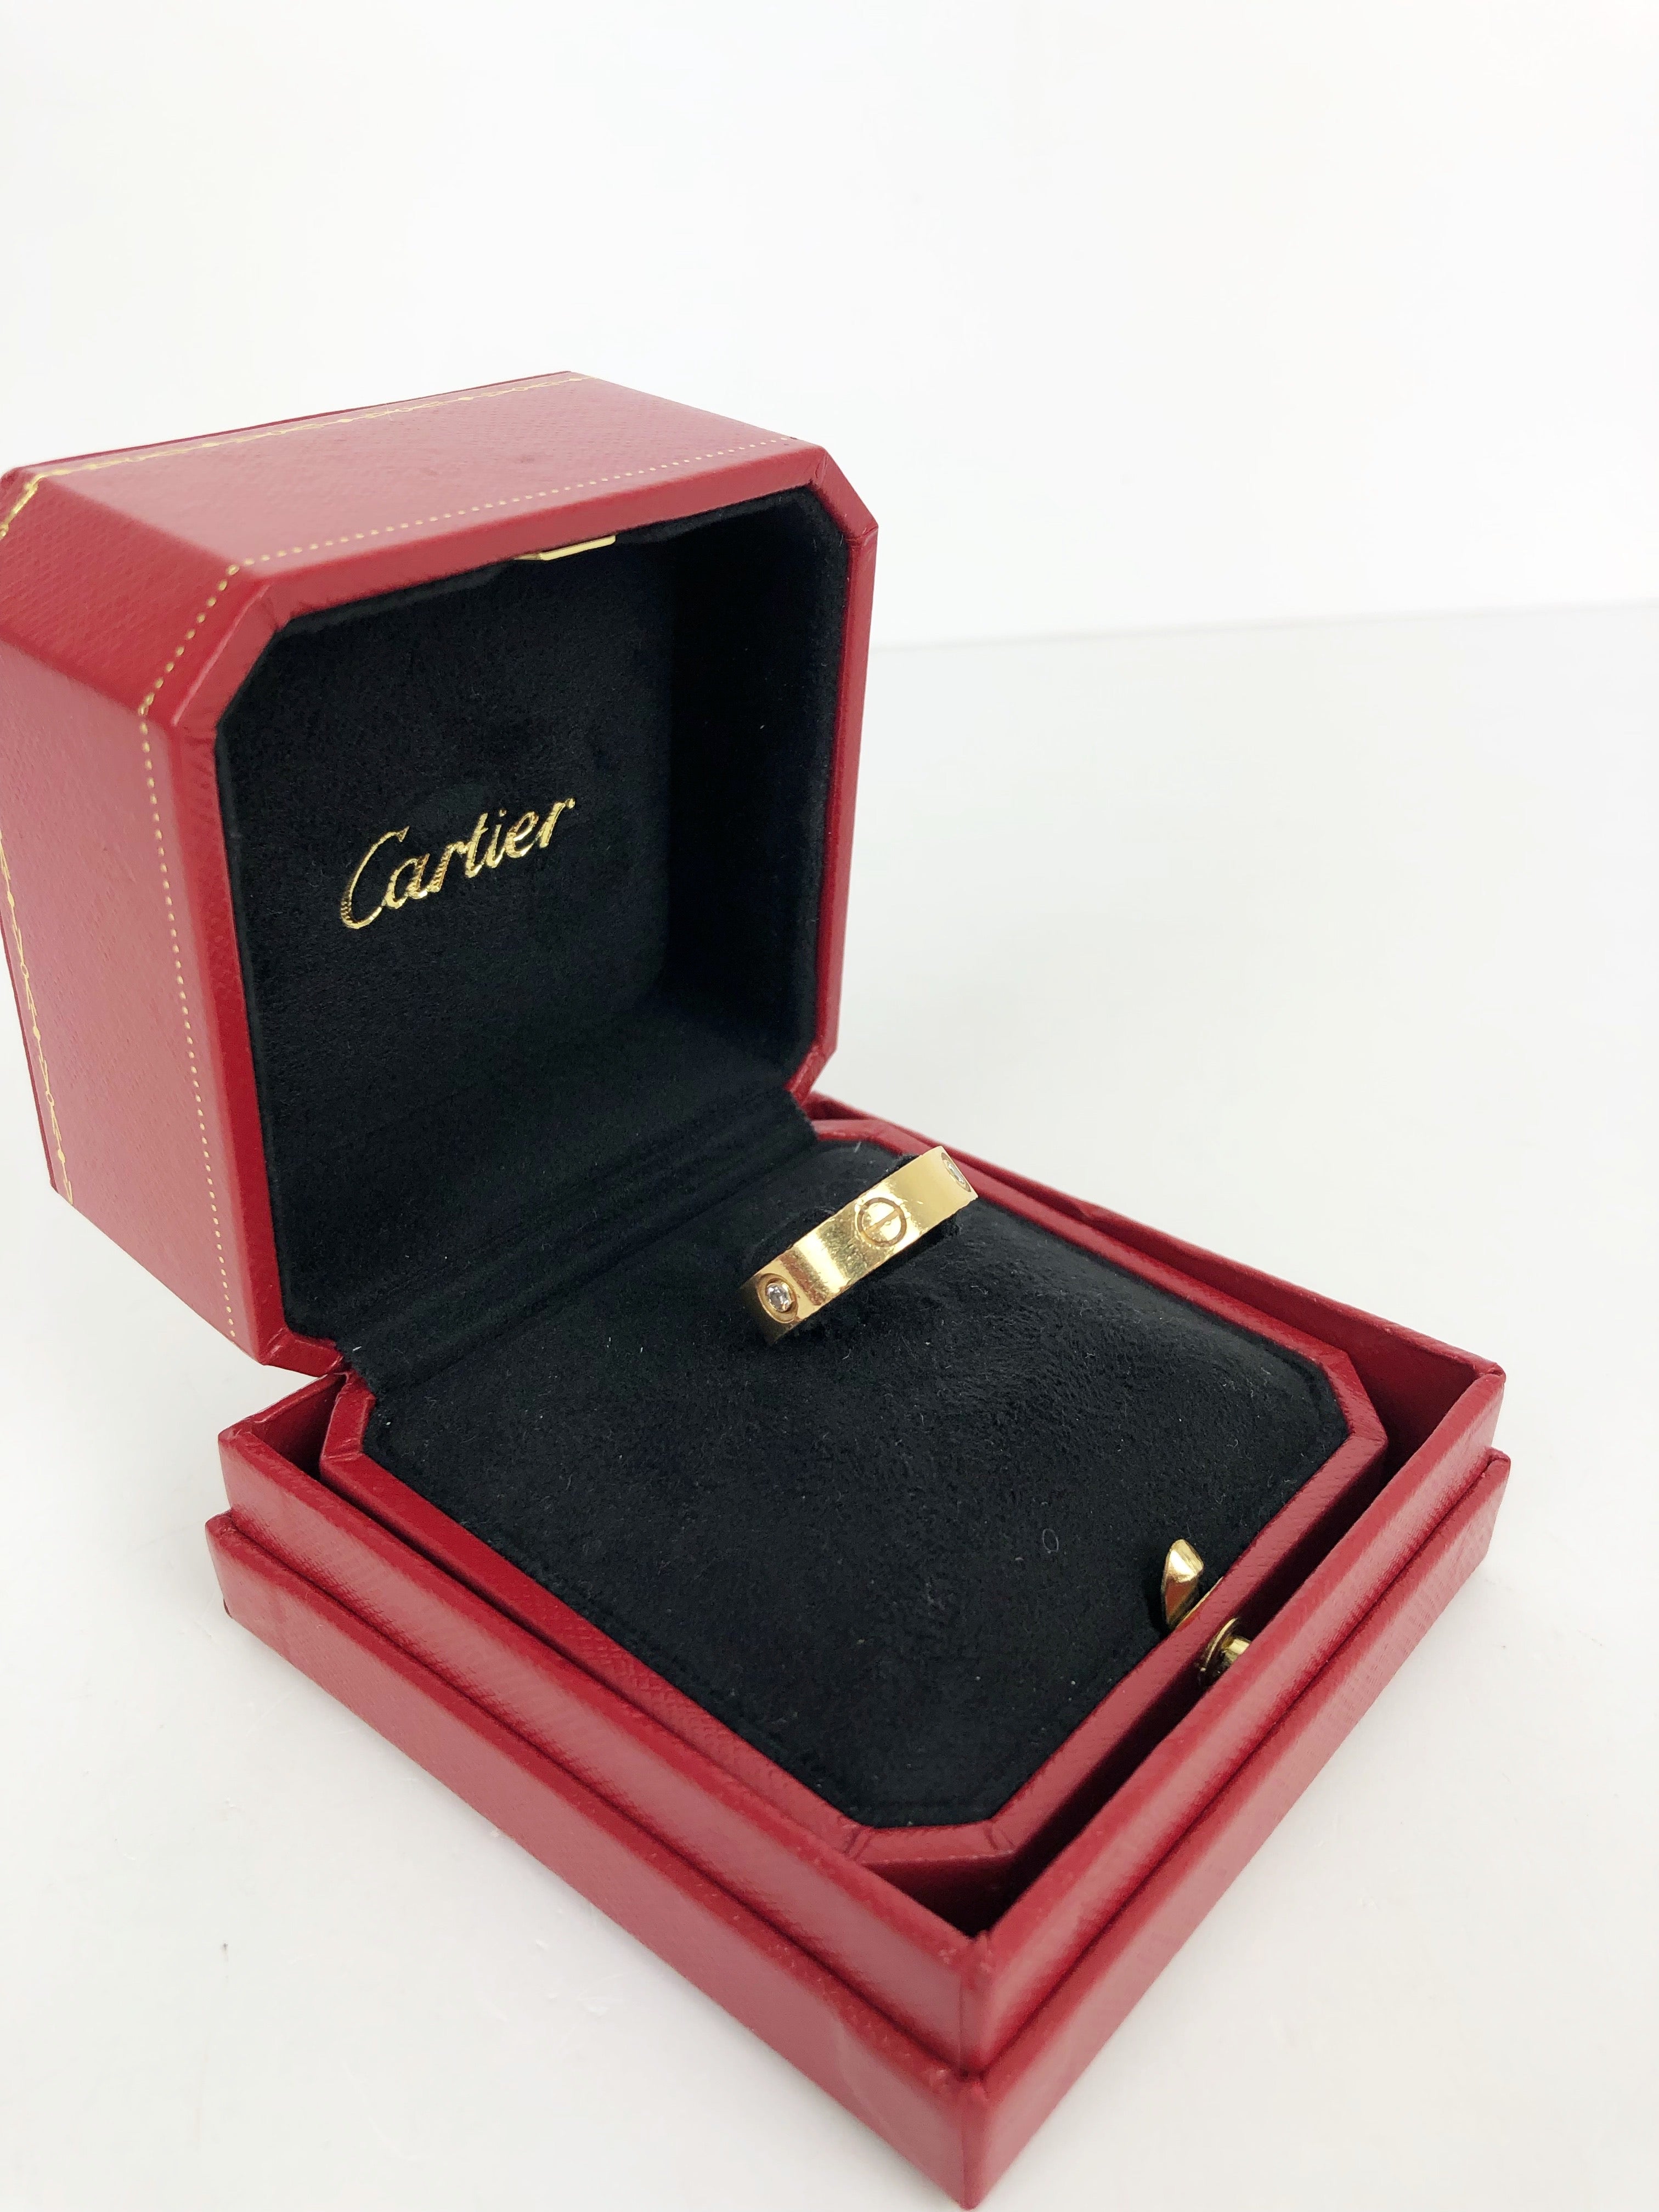 Cartier - 18 karat Guld Ring - Str 57